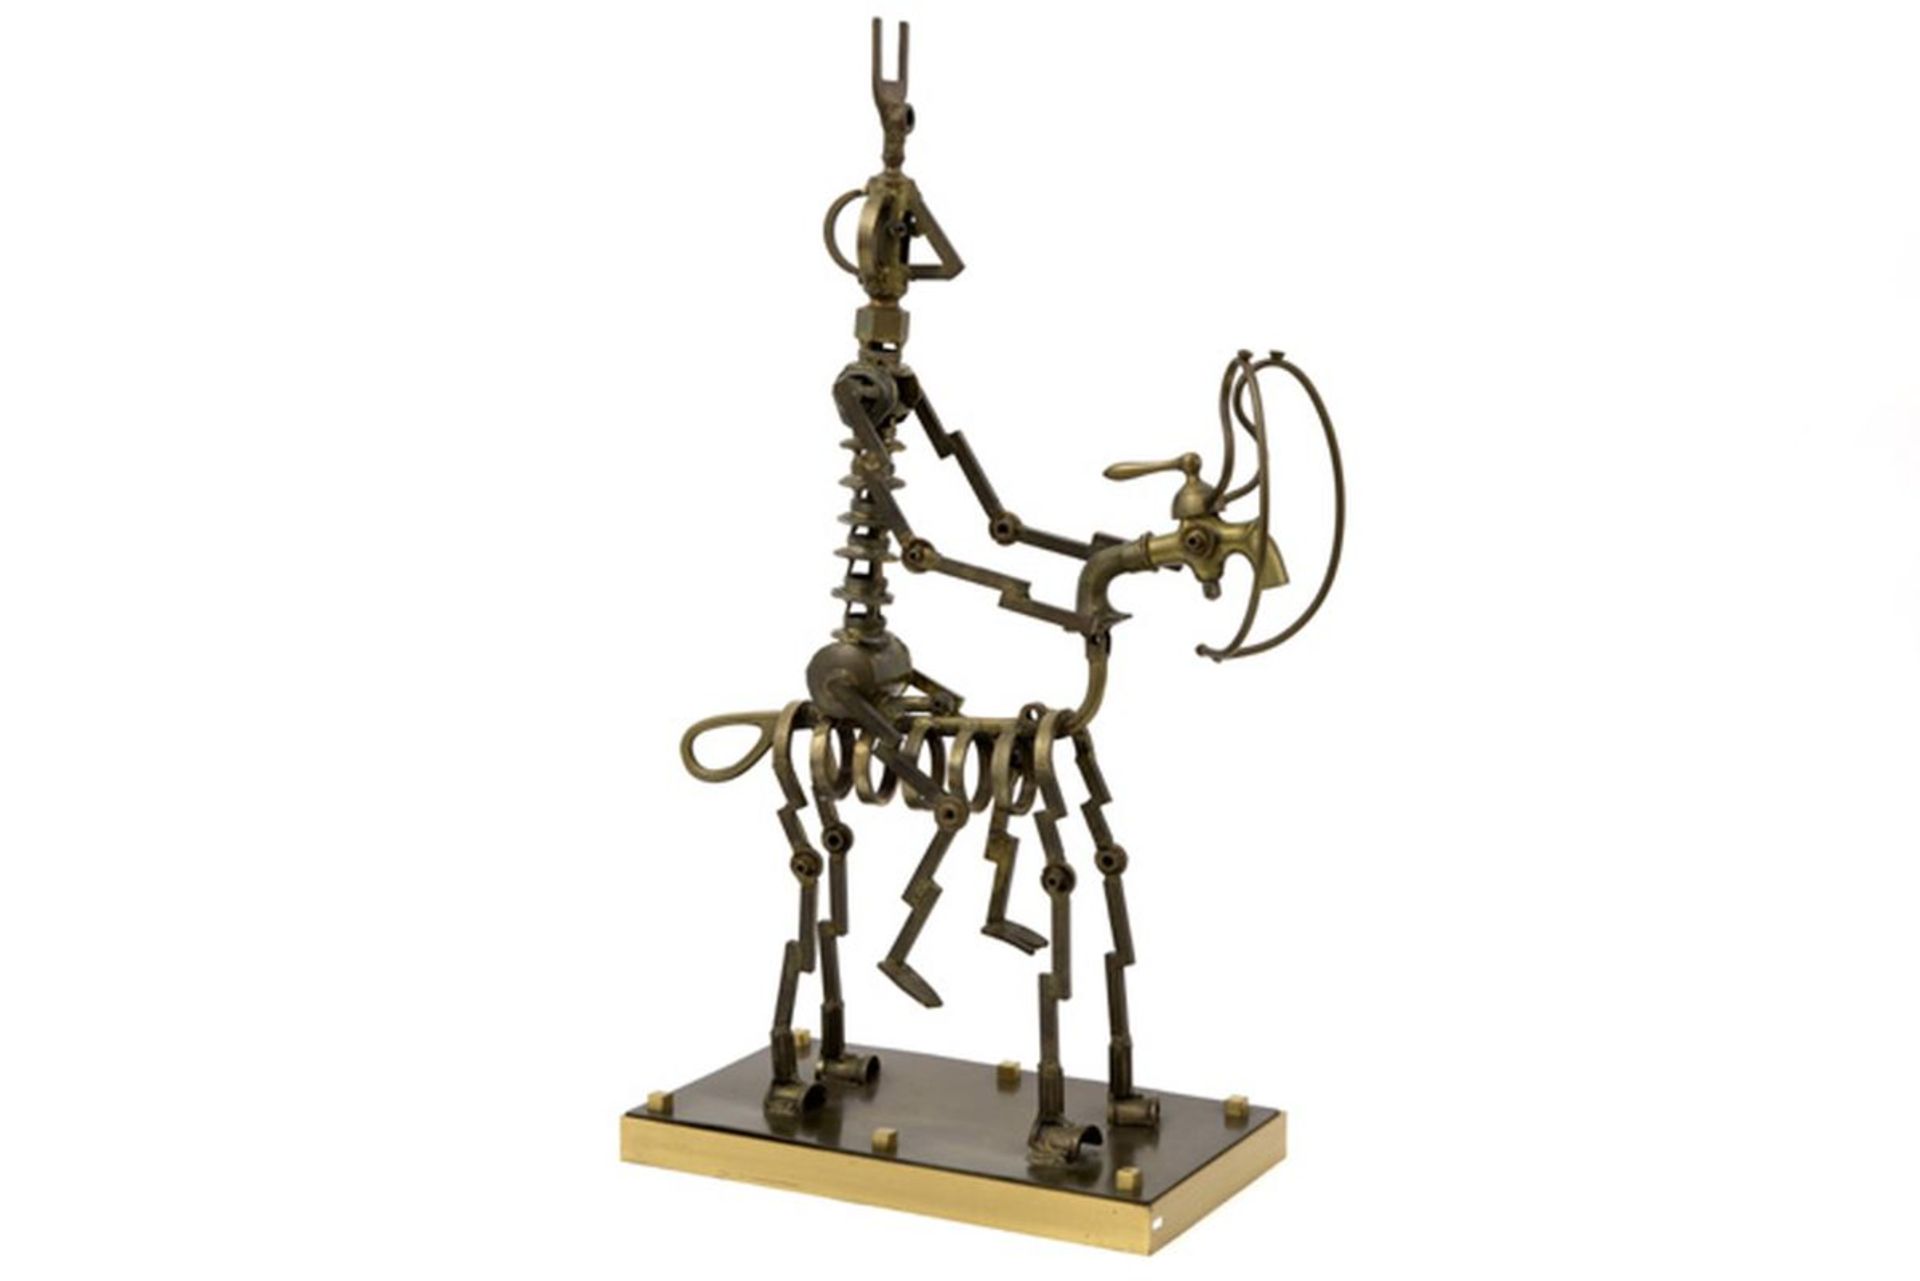 20th Cent. Belgian "Horseman" assemblage sculpture - signed Marsa - - MARSA (ps [...] - Image 3 of 4